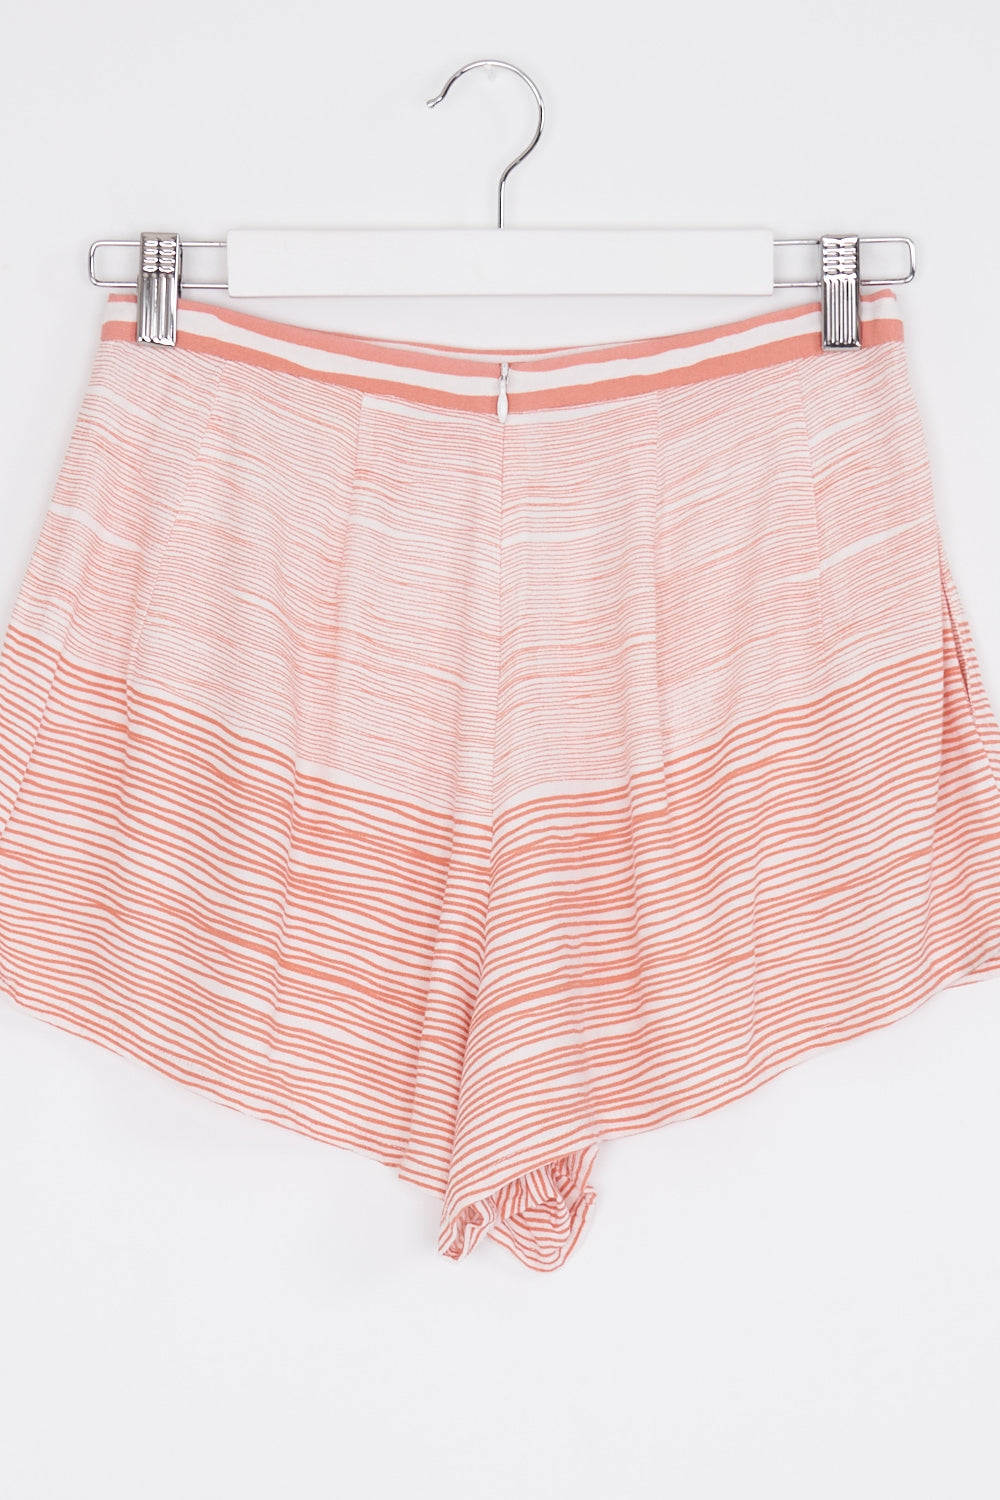 Zulu &amp; Zephyr Pink Patterned Shorts 8